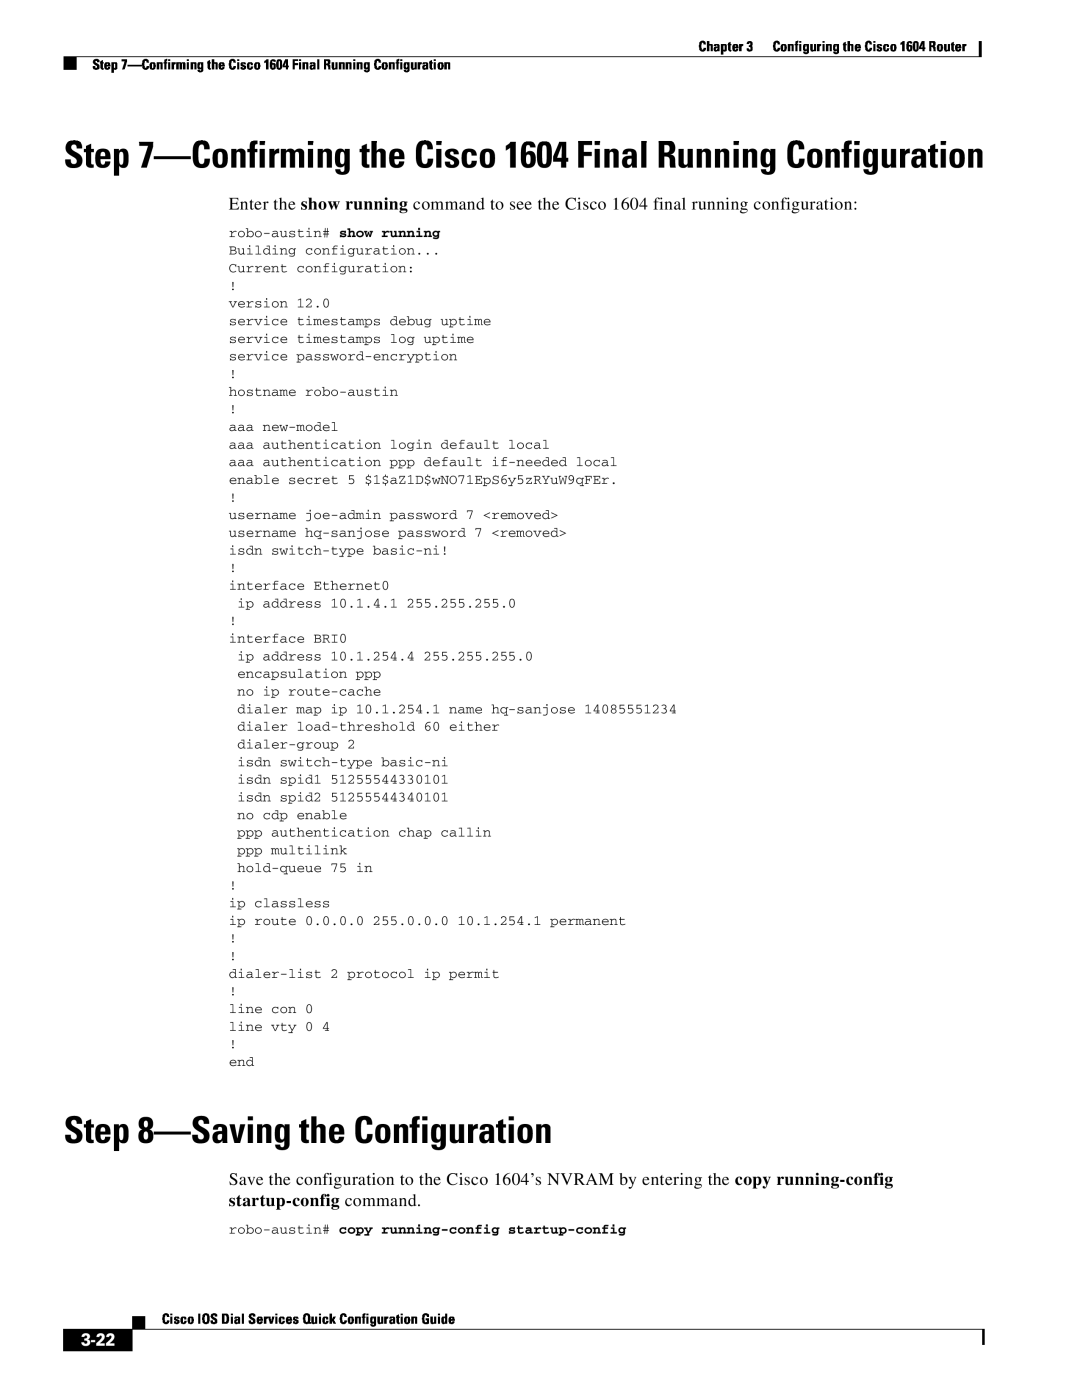 Cisco Systems Saving the Configuration, Confirming the Cisco 1604 Final Running Configuration, startup-config command 